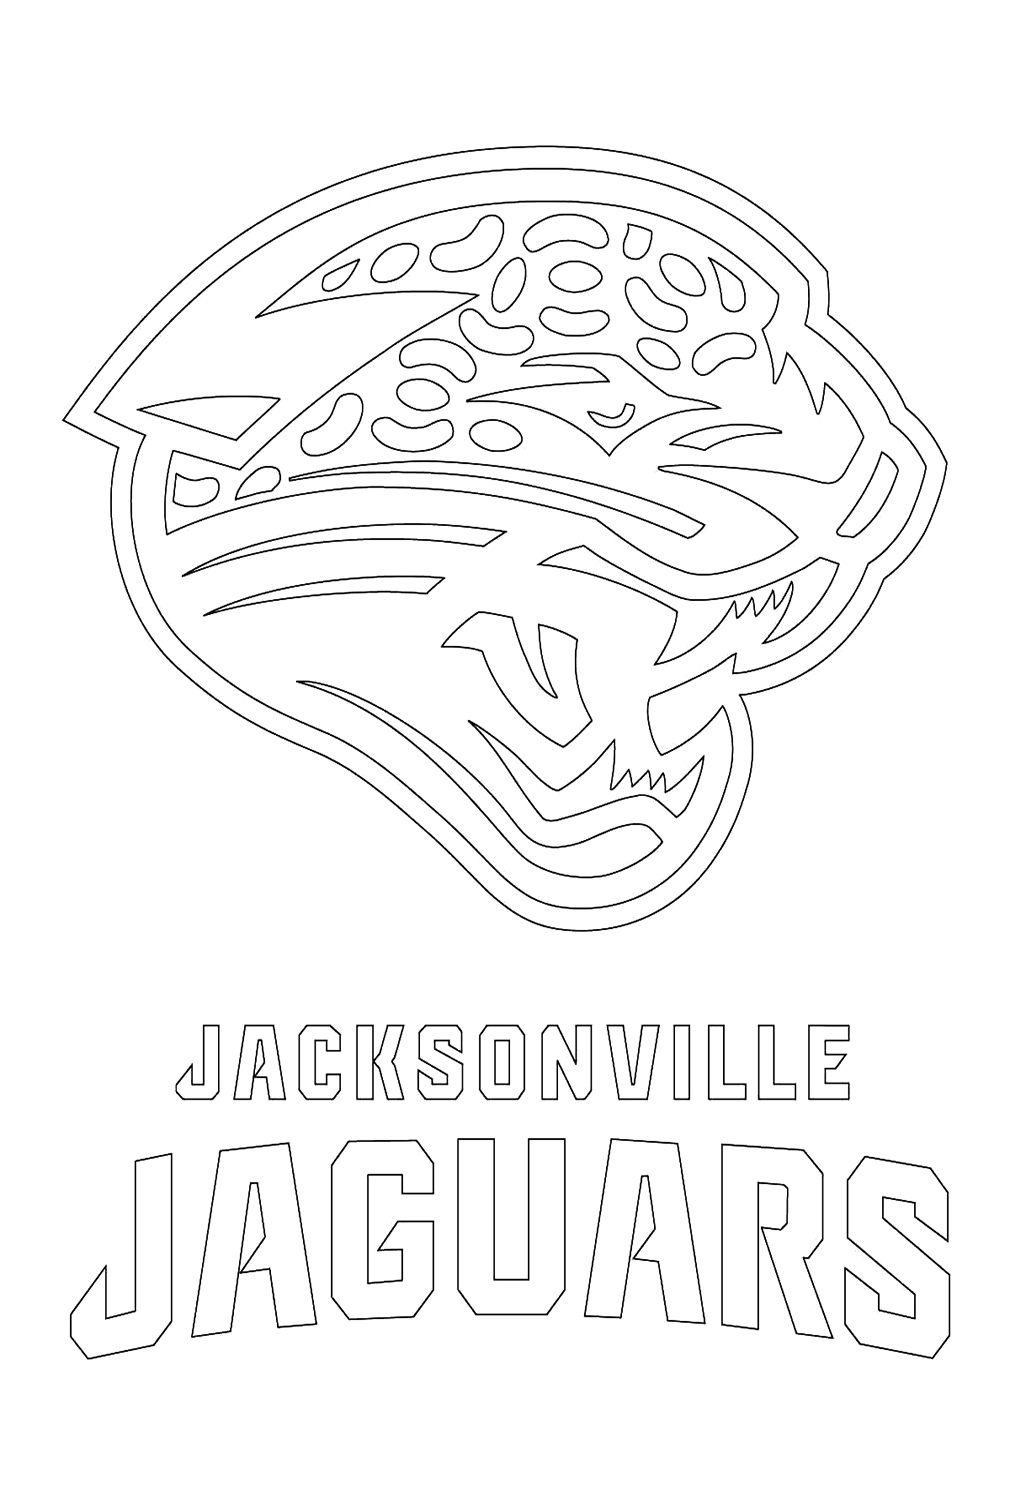 Jacksonville Jaguars Logo from NFL